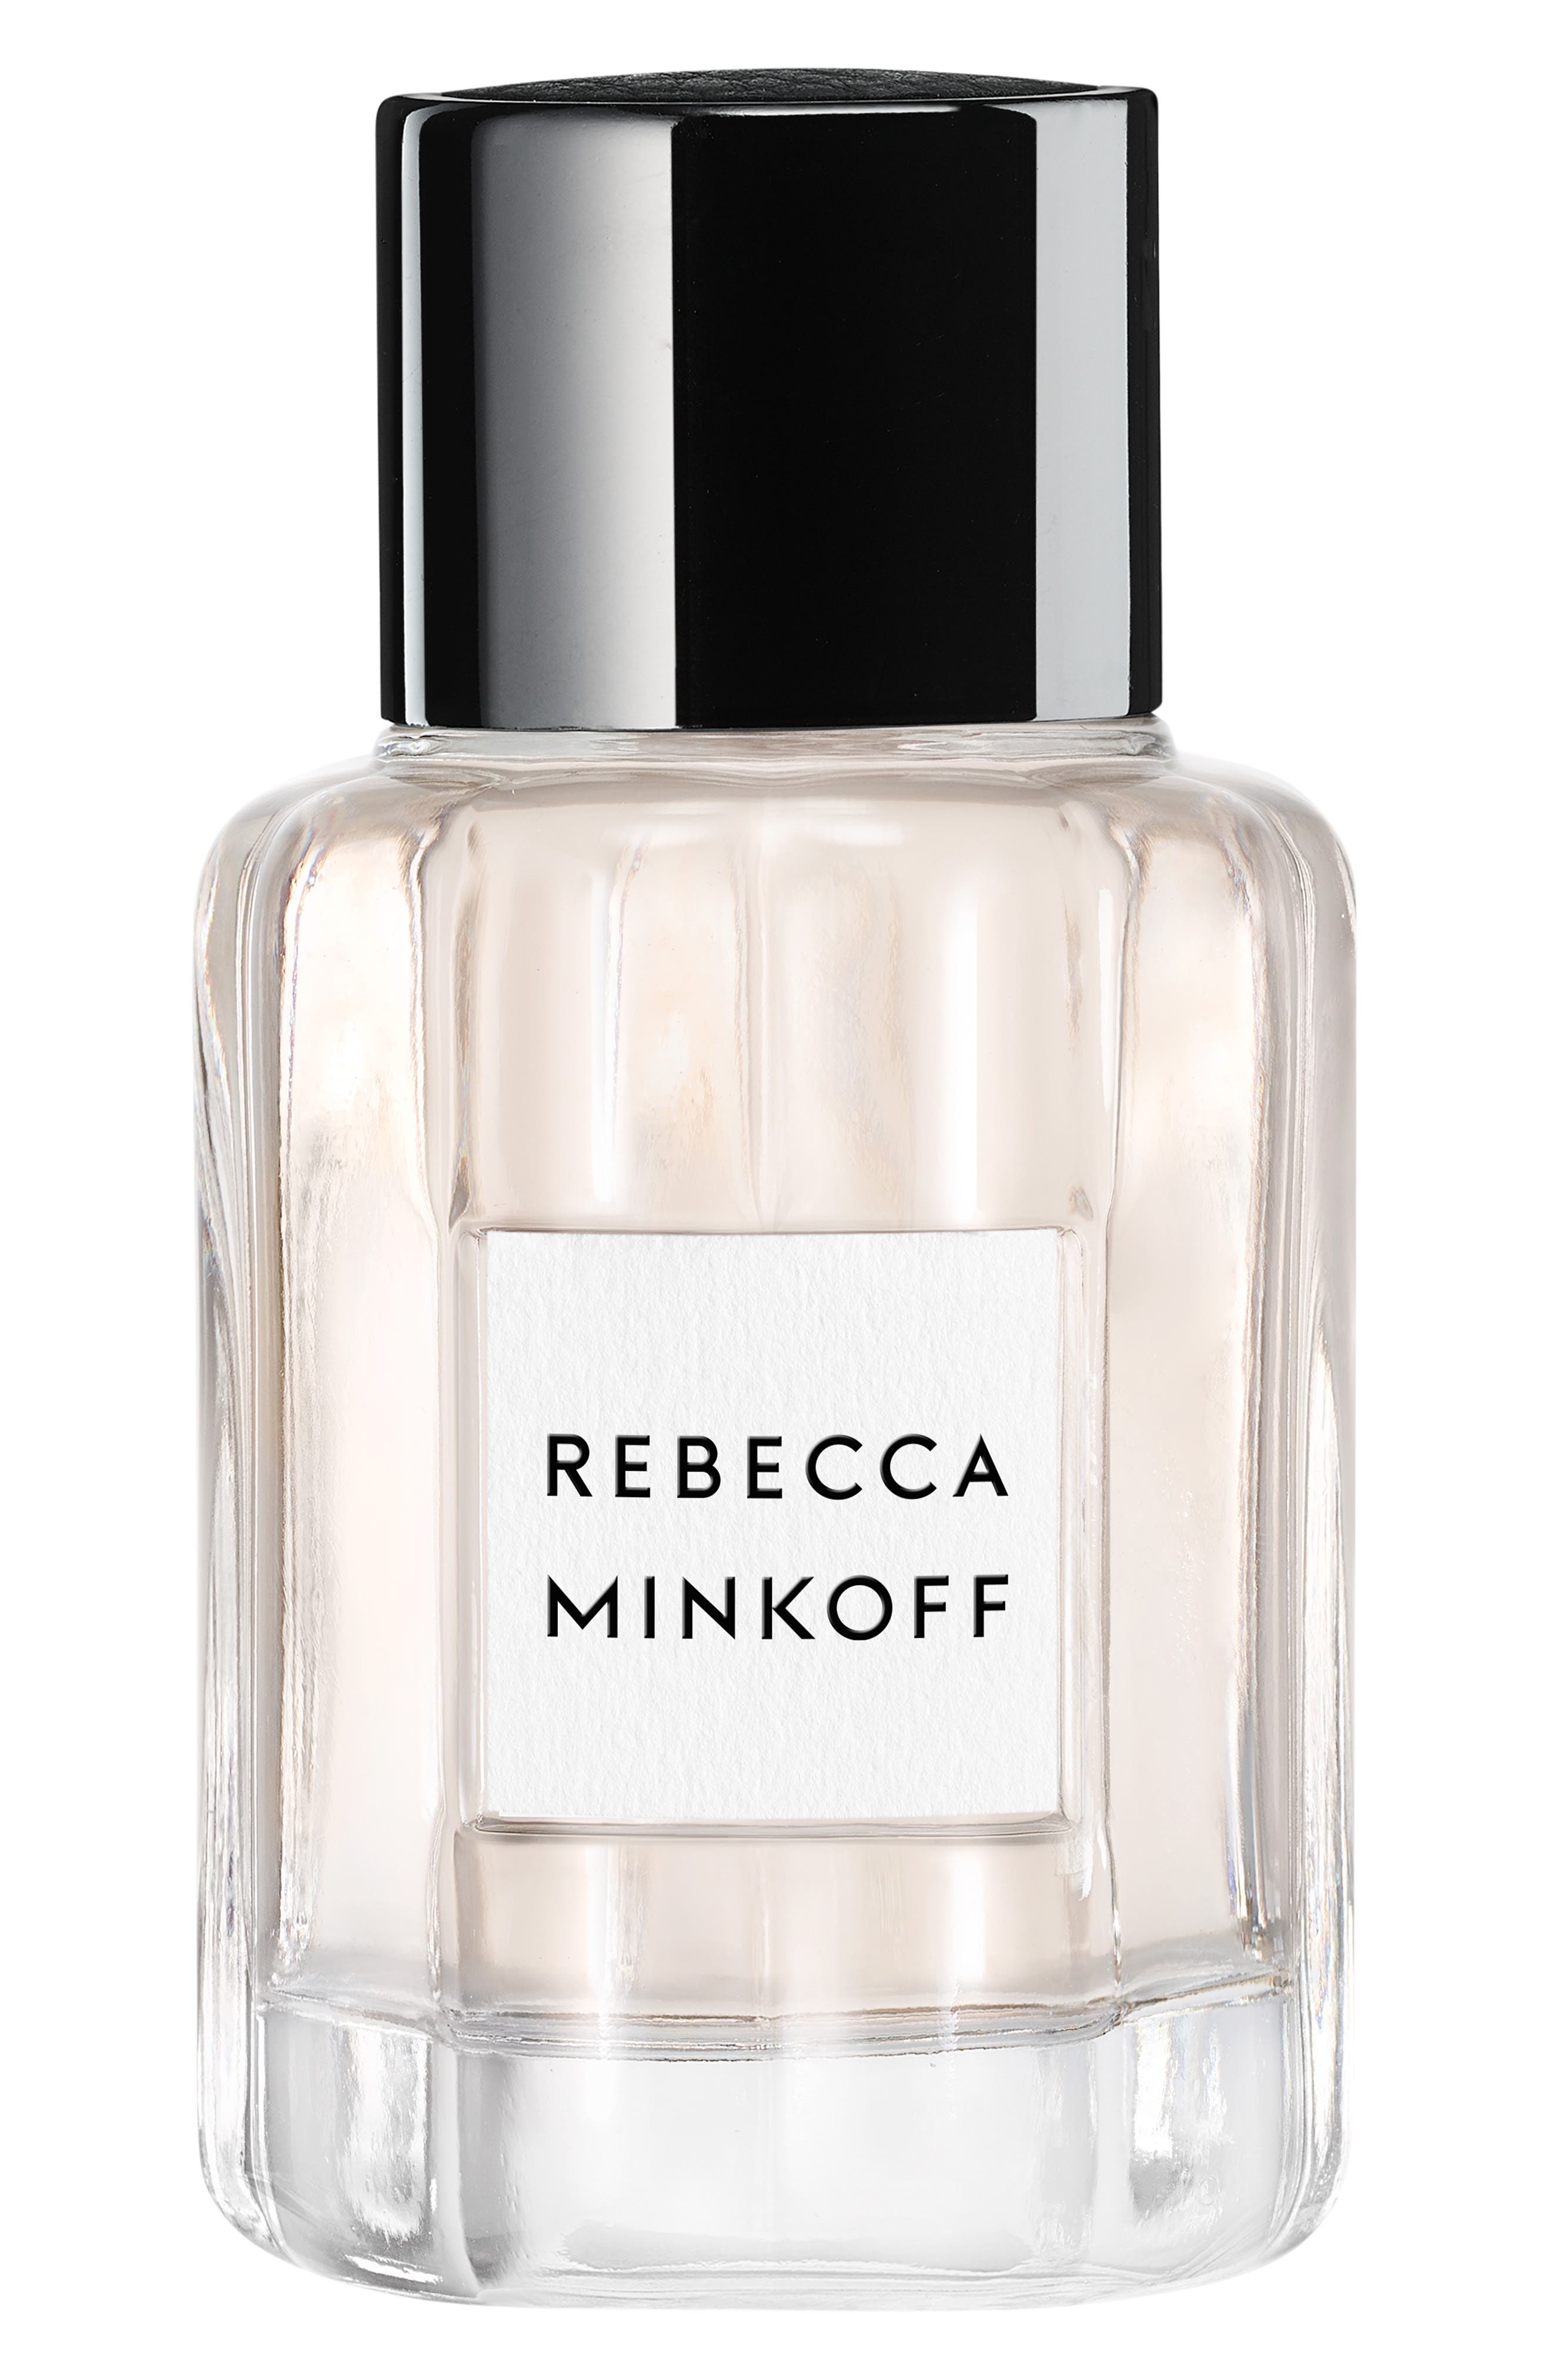 Rebecca Minkoff Eau de Parfum in Regular at Nordstrom, Size 1 Oz